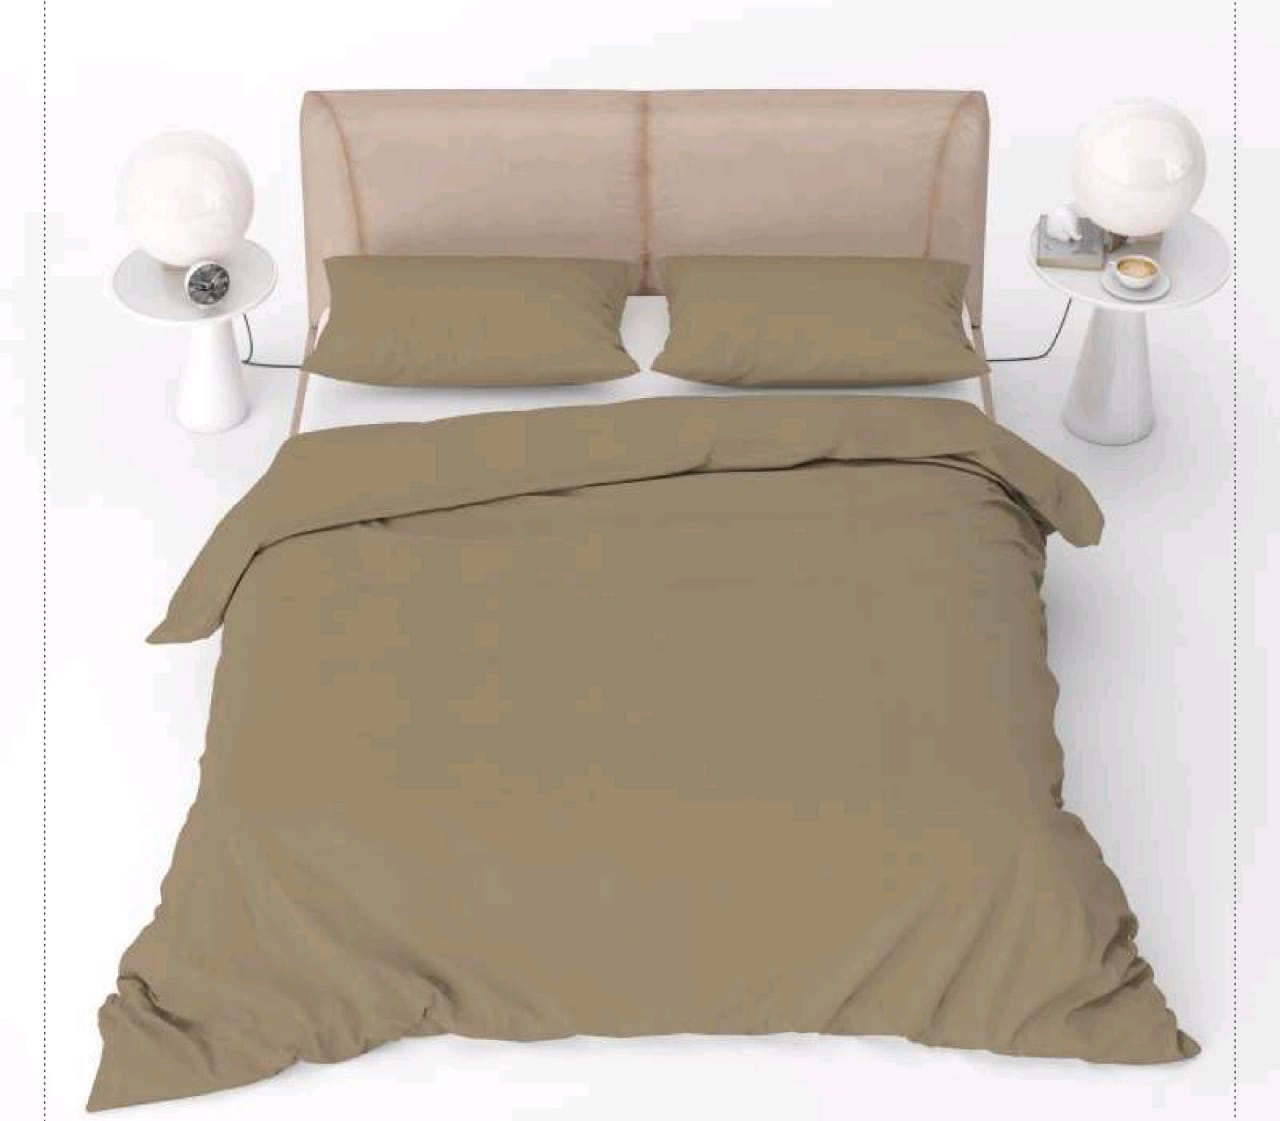 cotton satin bedsheet size 108x108 inch